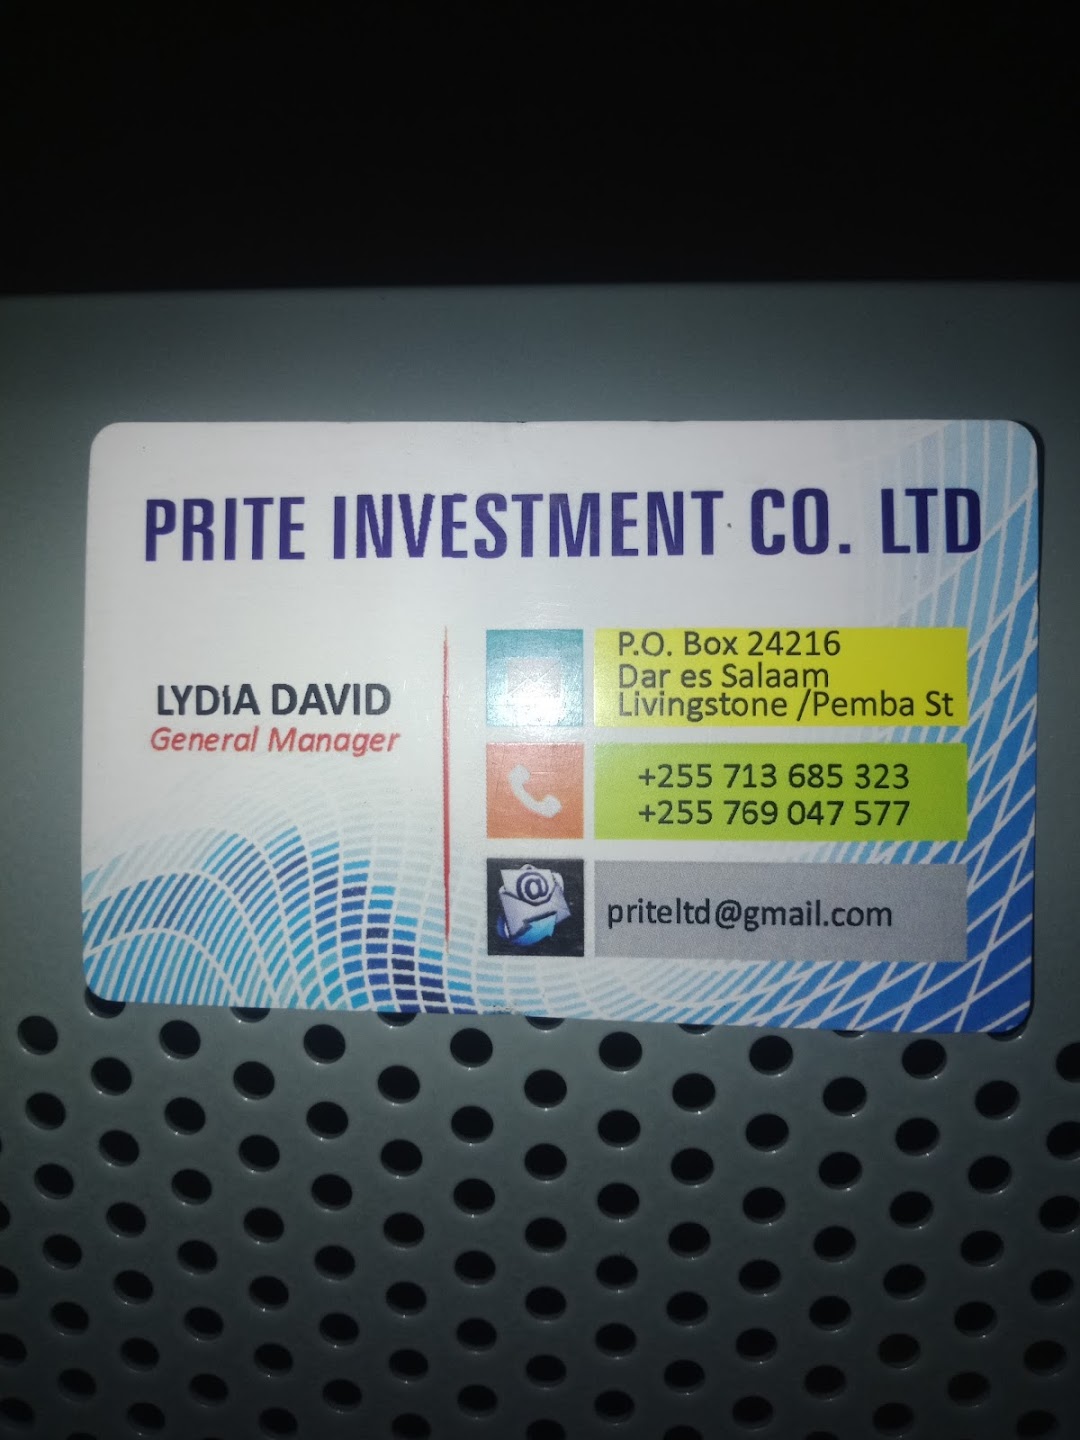 Prite investment co. Ltd